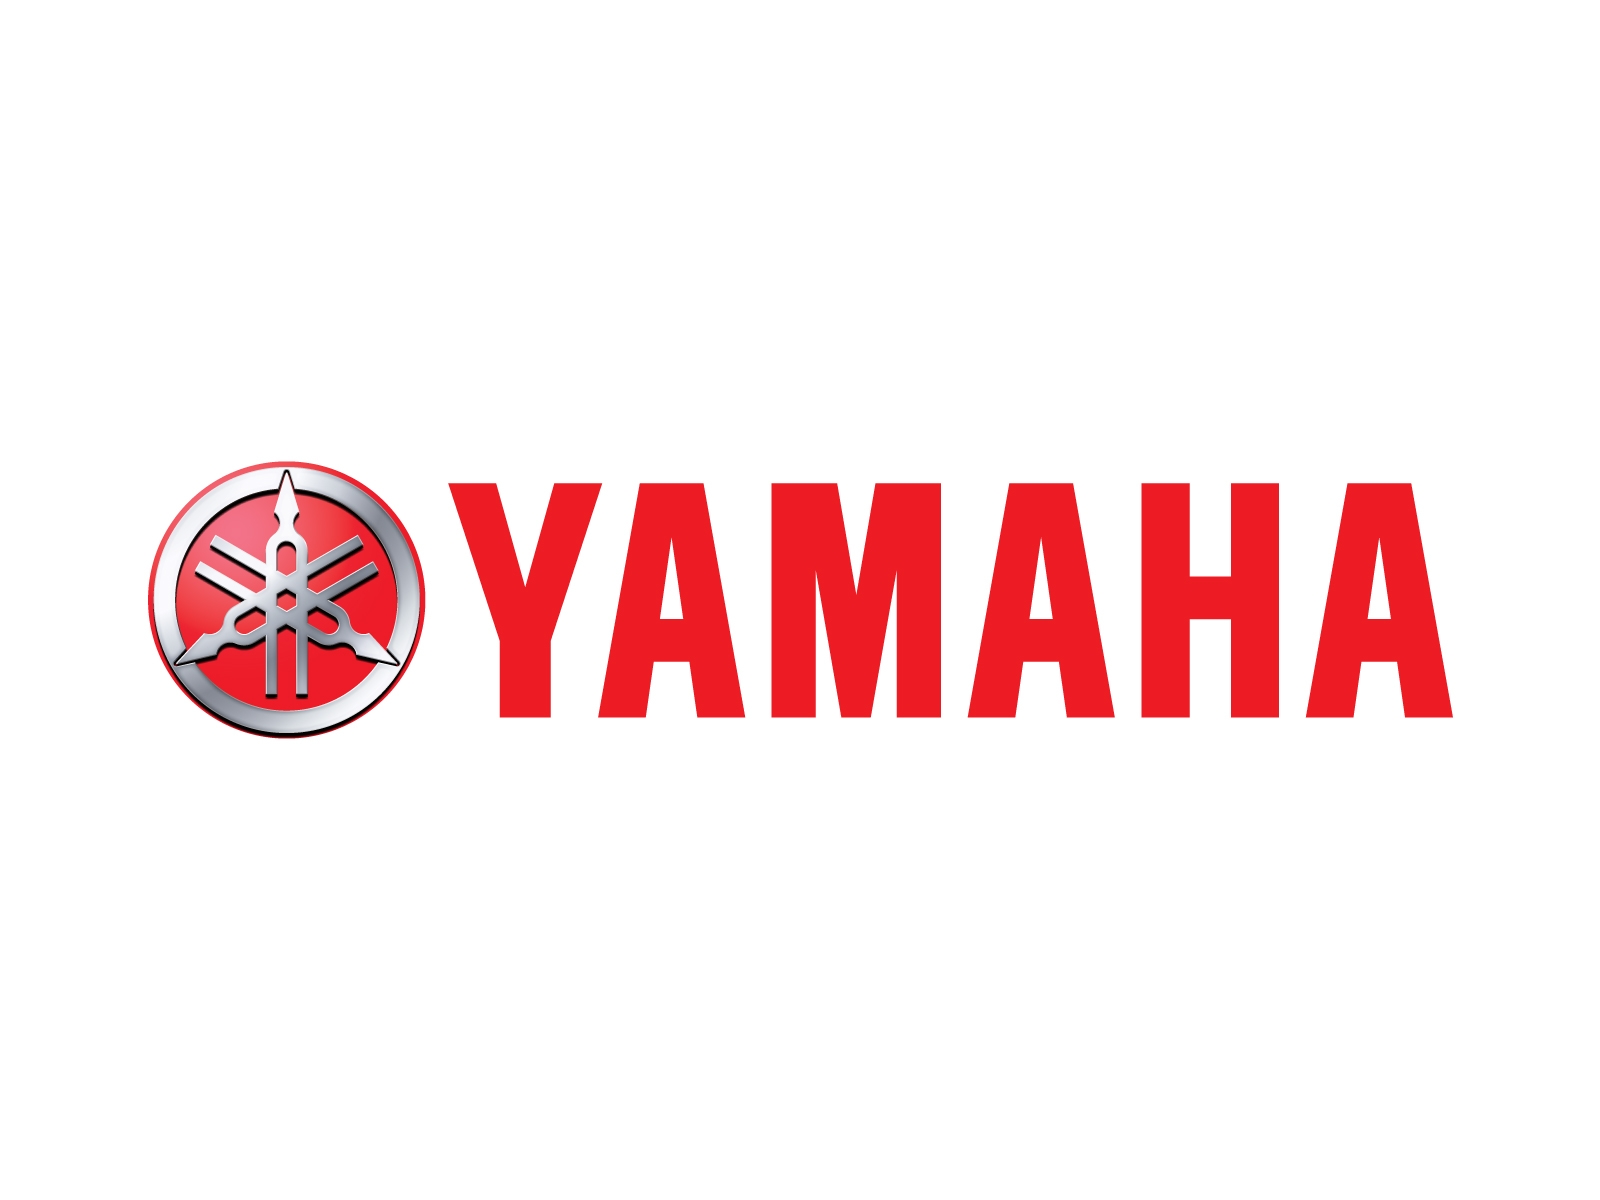  Yamaha Logo WallpapersYamaha R1 Wallpapers and Yamaha R6 Wallpapers 1600x1200